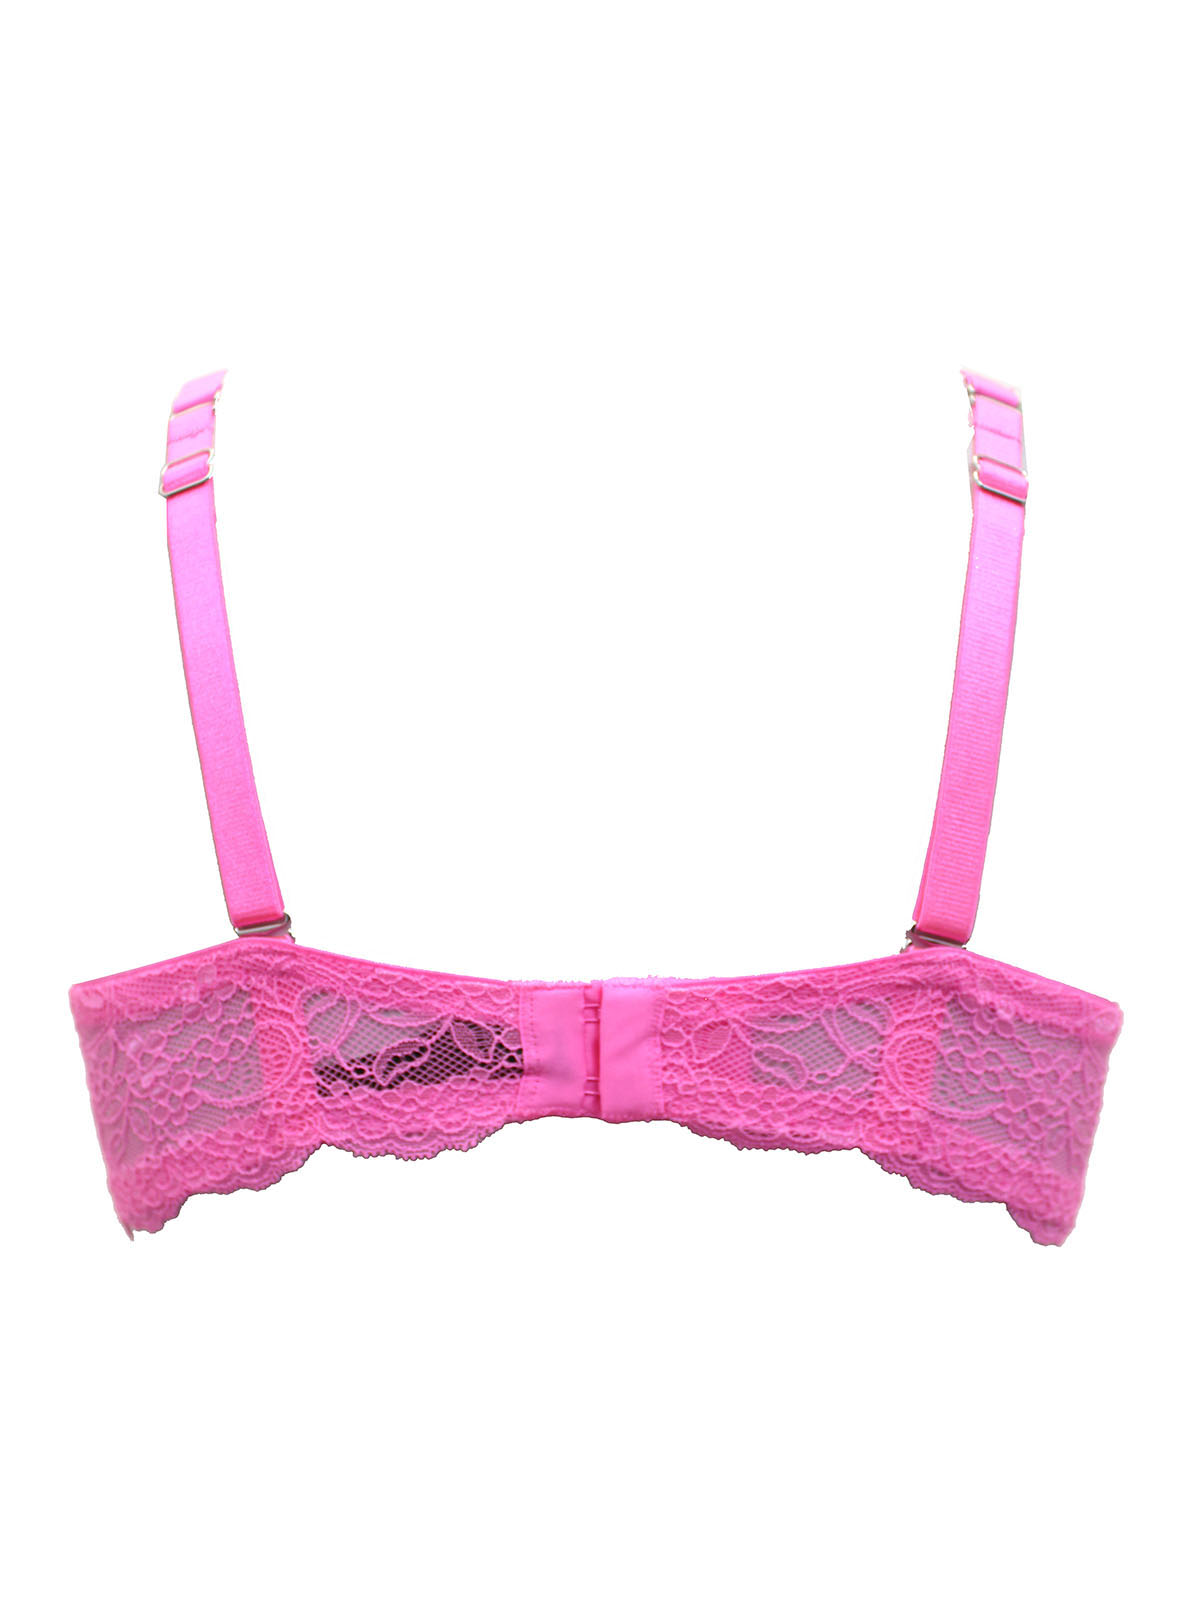 Boux Avenue Liliana plunge push up bra - Powder Pink - 32C, £24.00